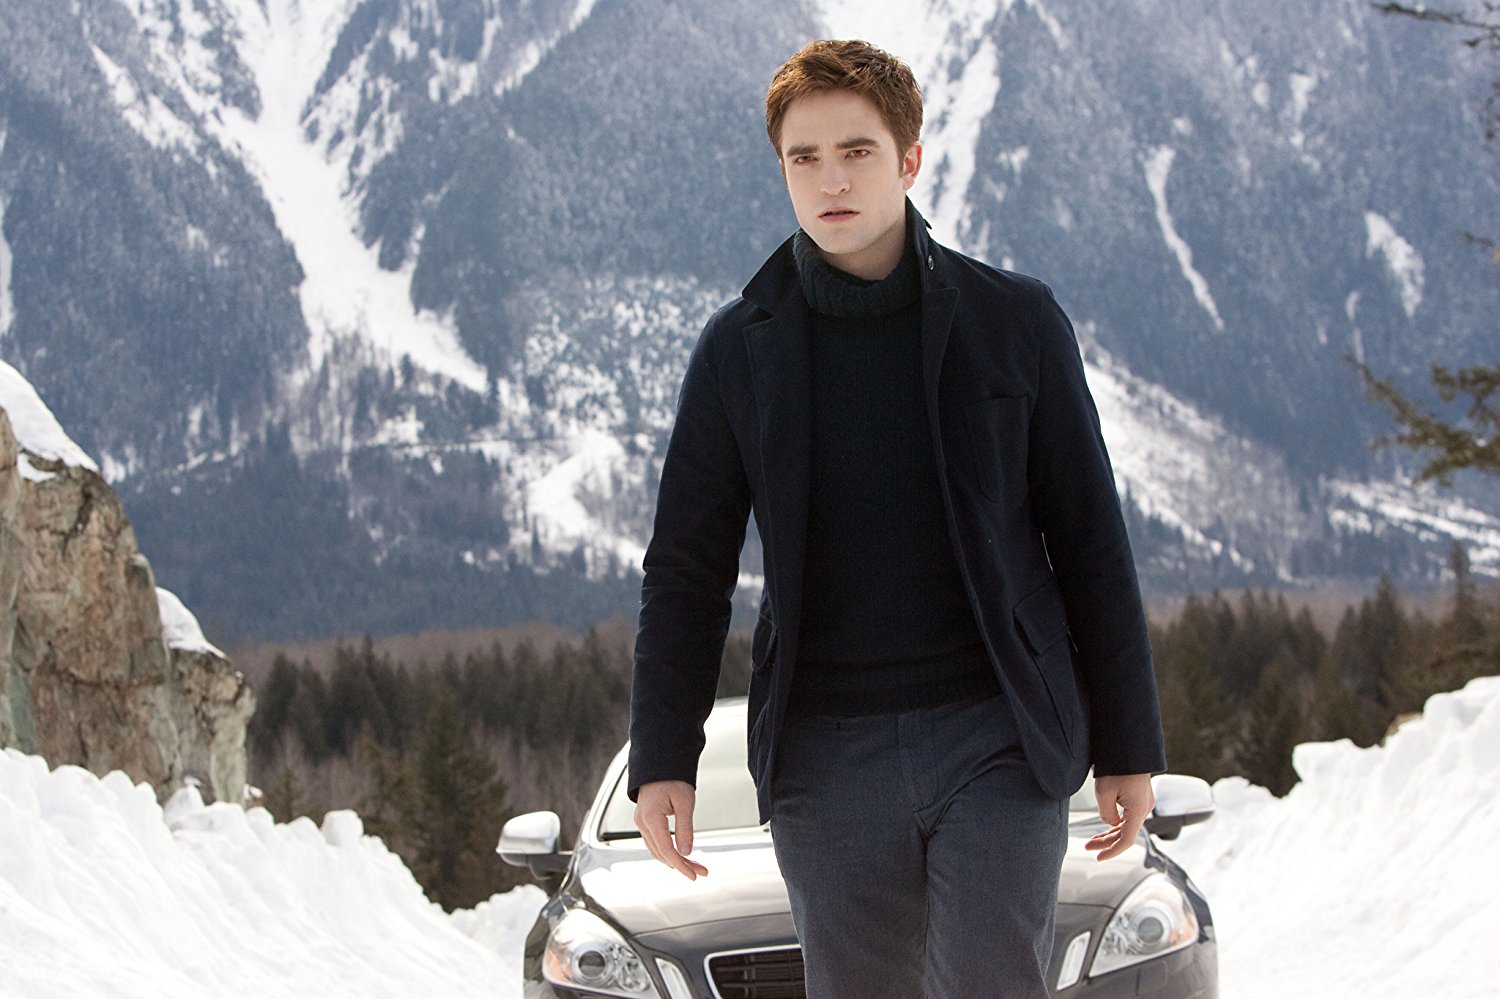 Edward Cullen (Twilight character)